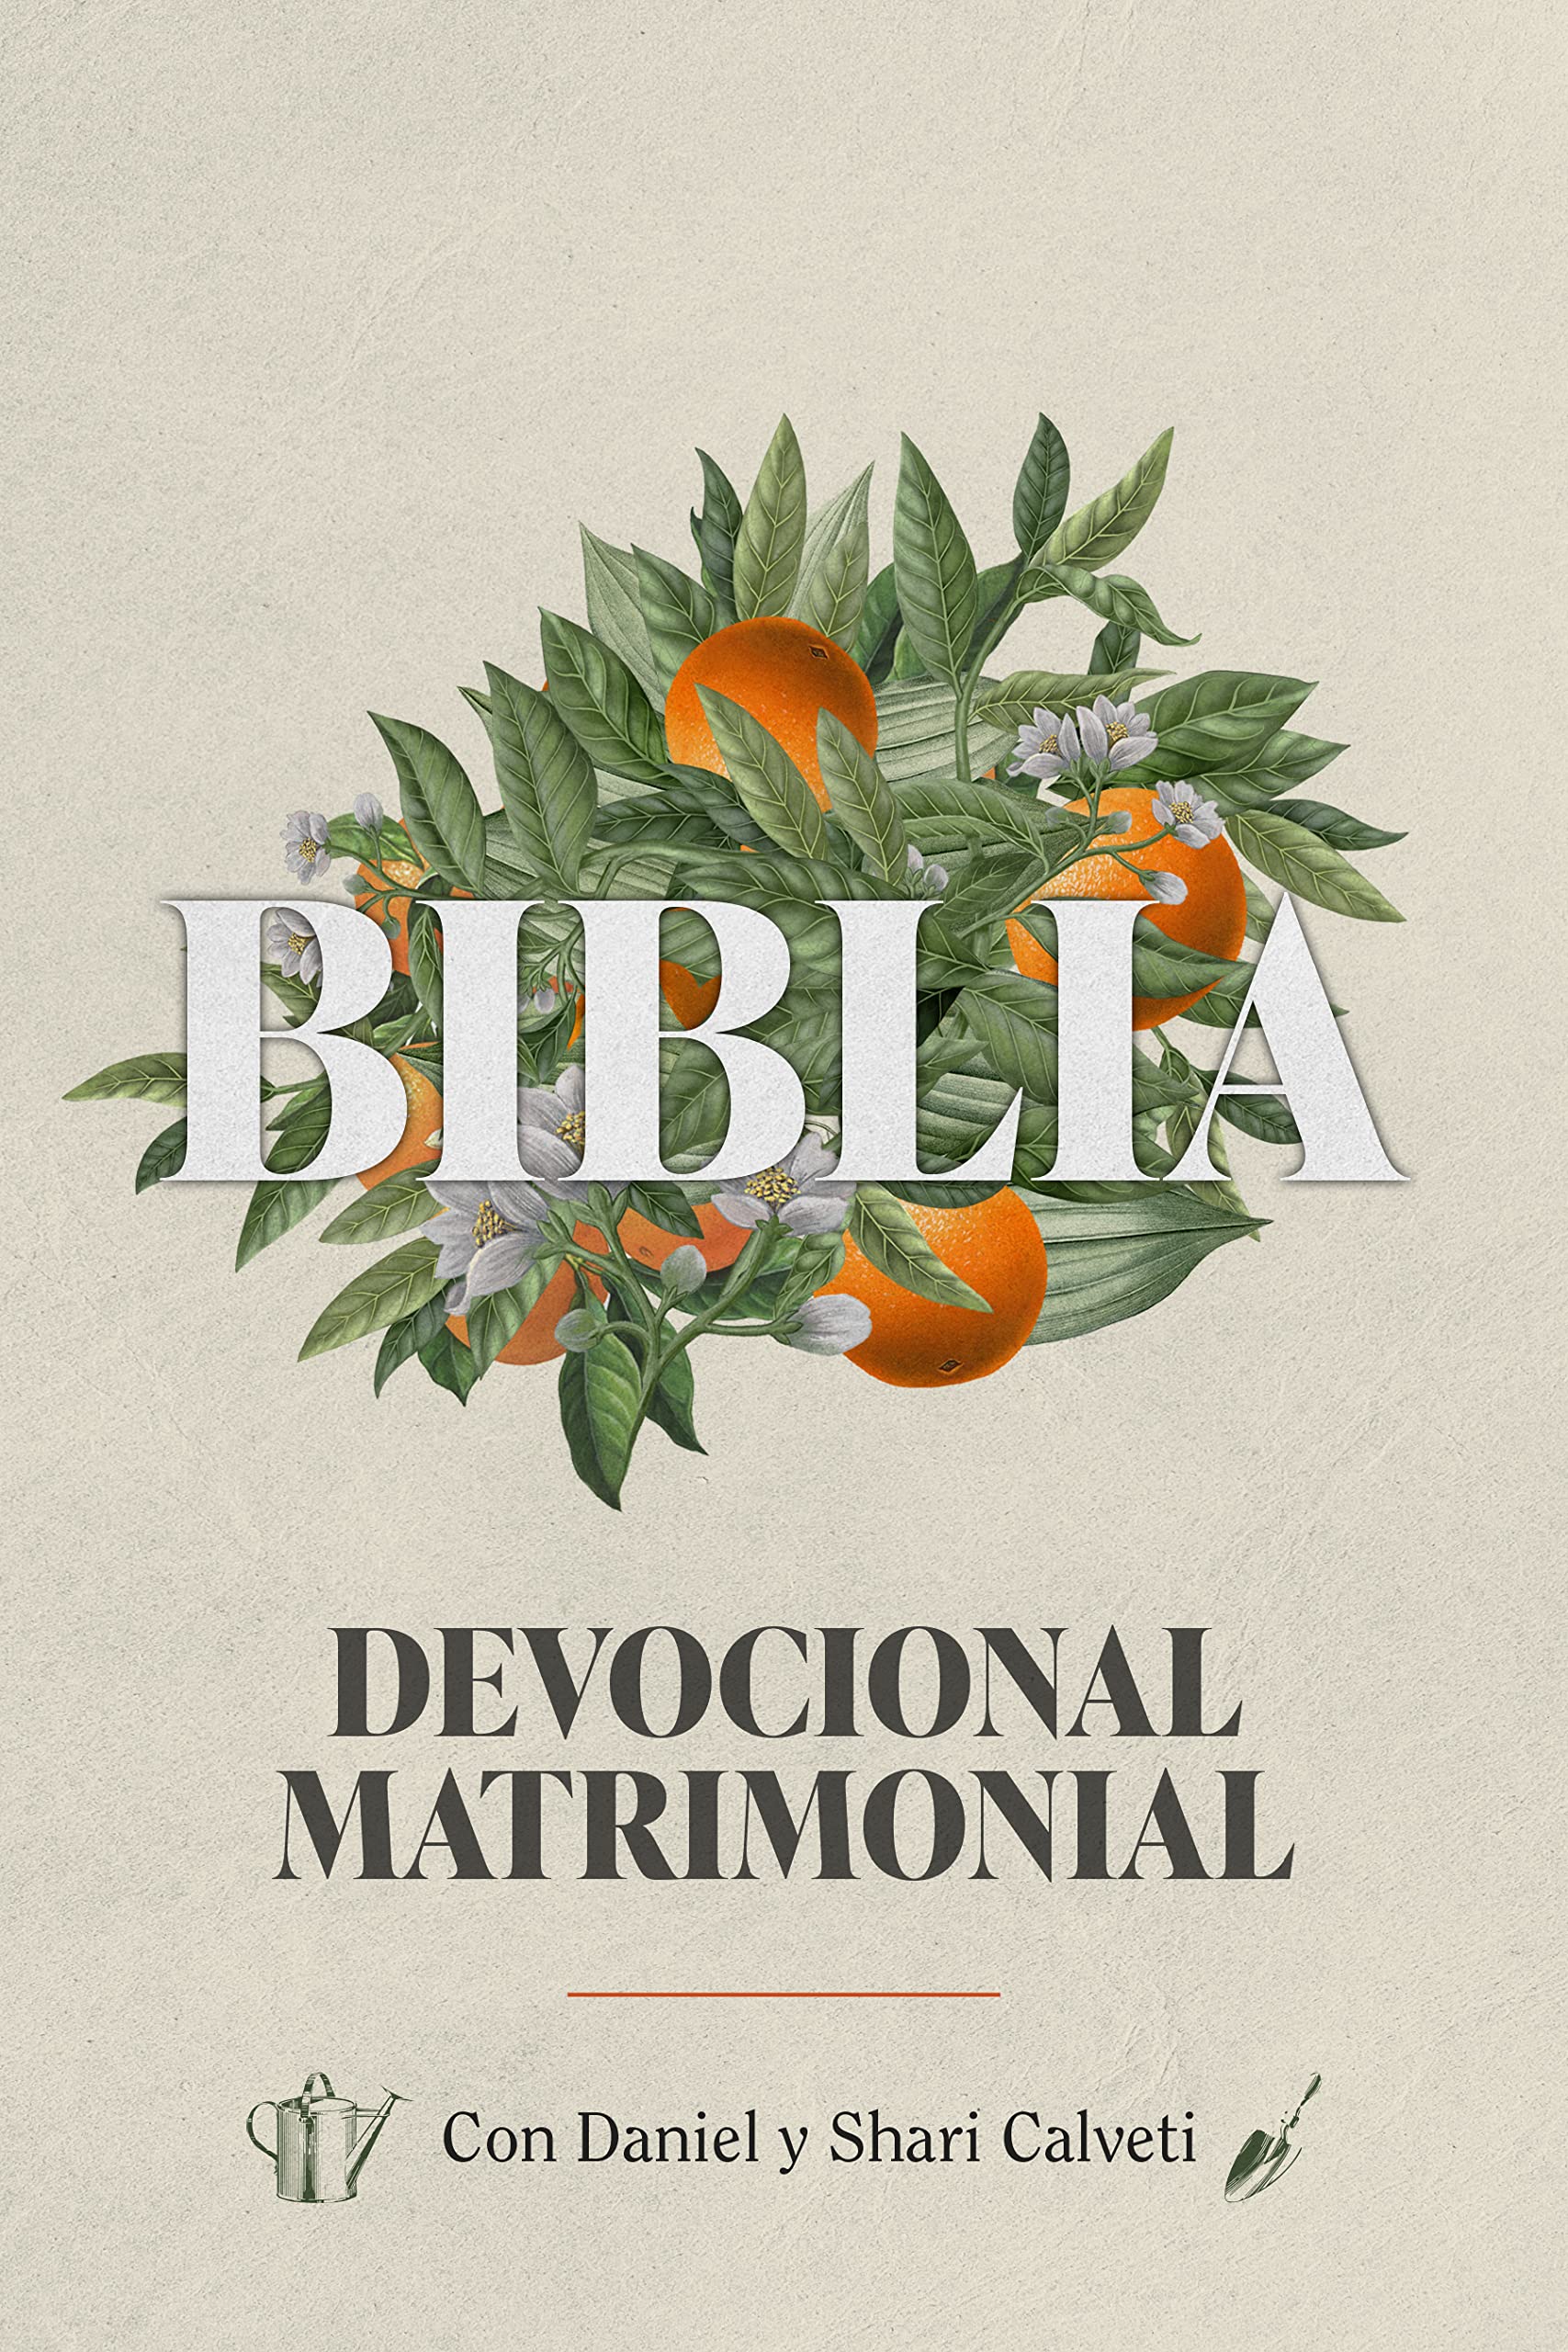 Biblia devocional matrimonial - edc. lujo (Marriage Devotional Bible - Deluxe edition) (Spanish Edition)